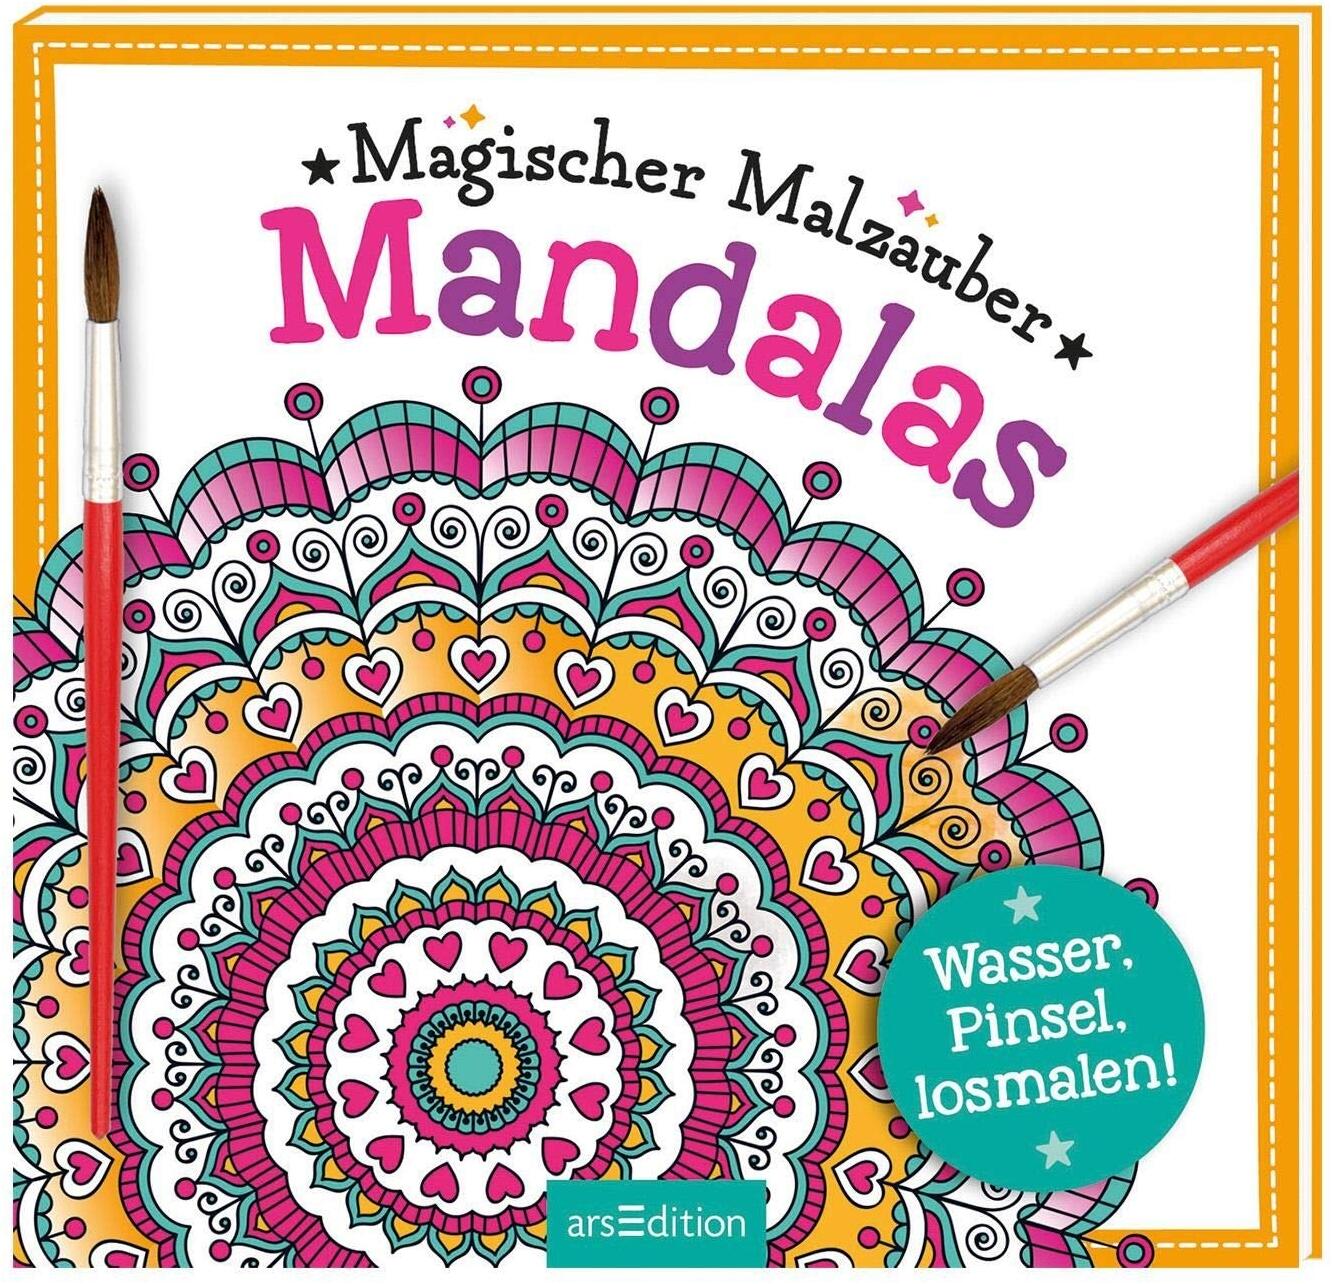 Ars Edition Magischer Malzauber Mandalas